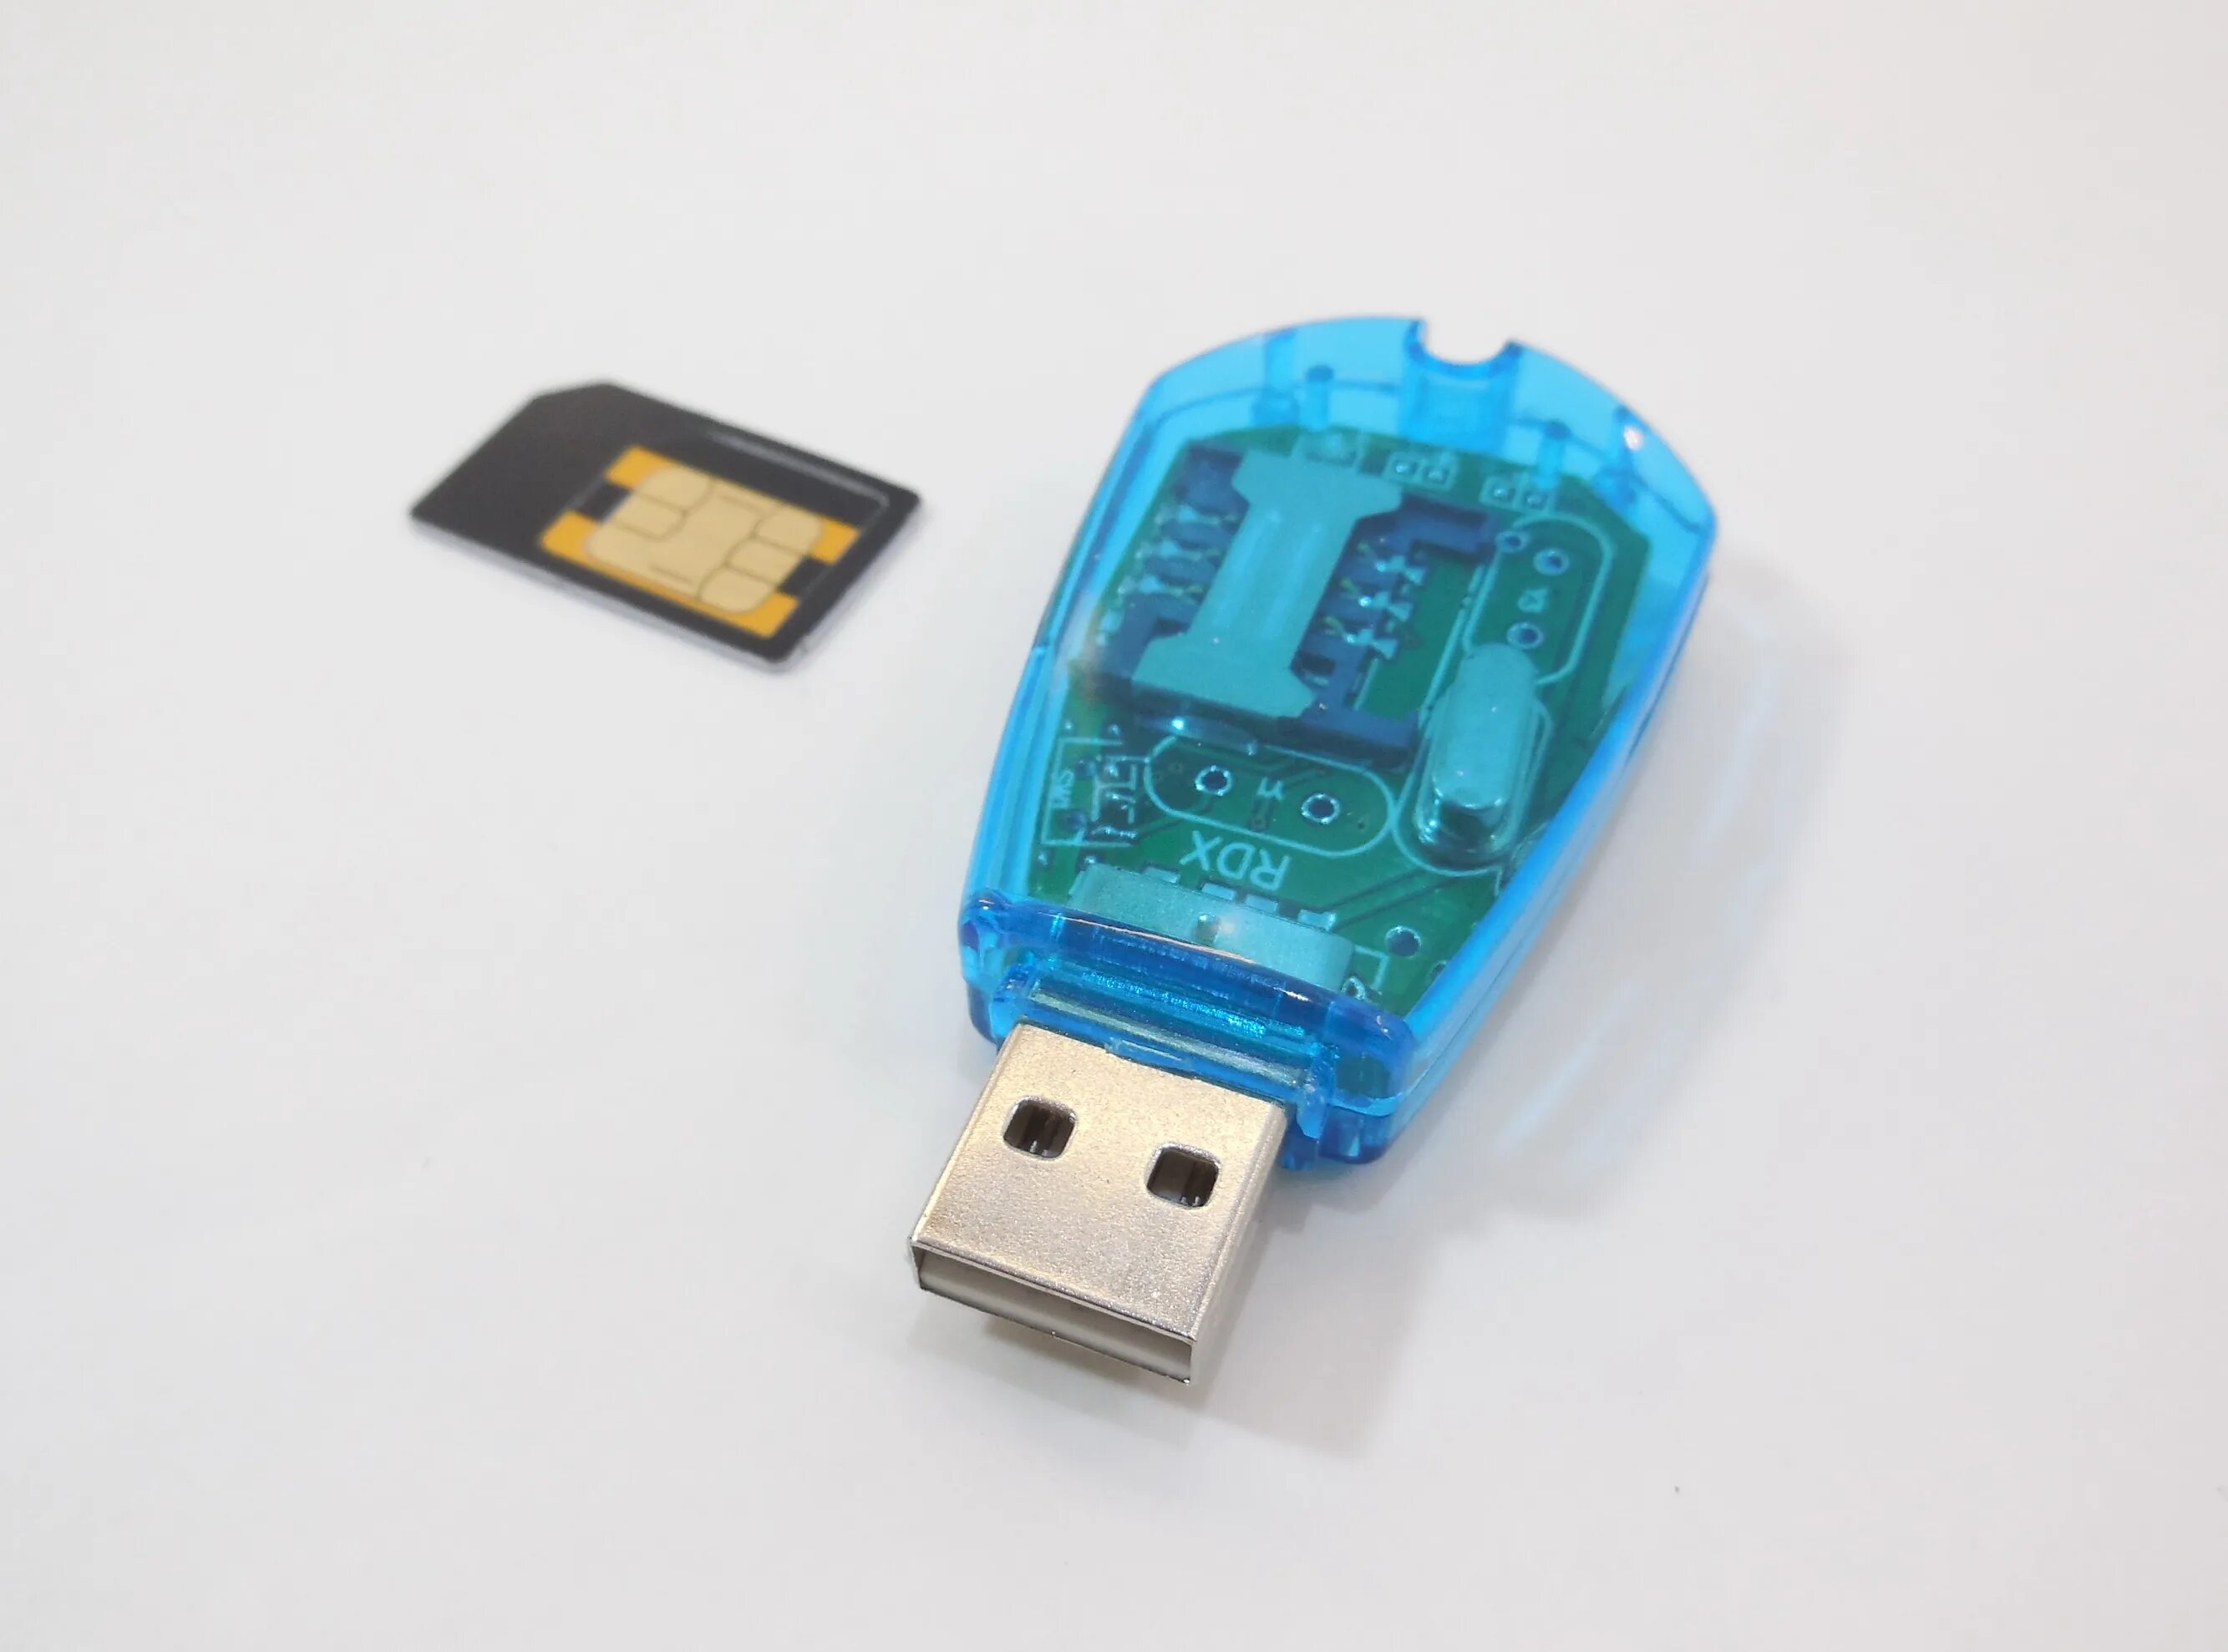 USB картридер SIM карт. USB SIM Reader lu980h. J330 SIM Card картридер. Адаптер USB SIM narxi.